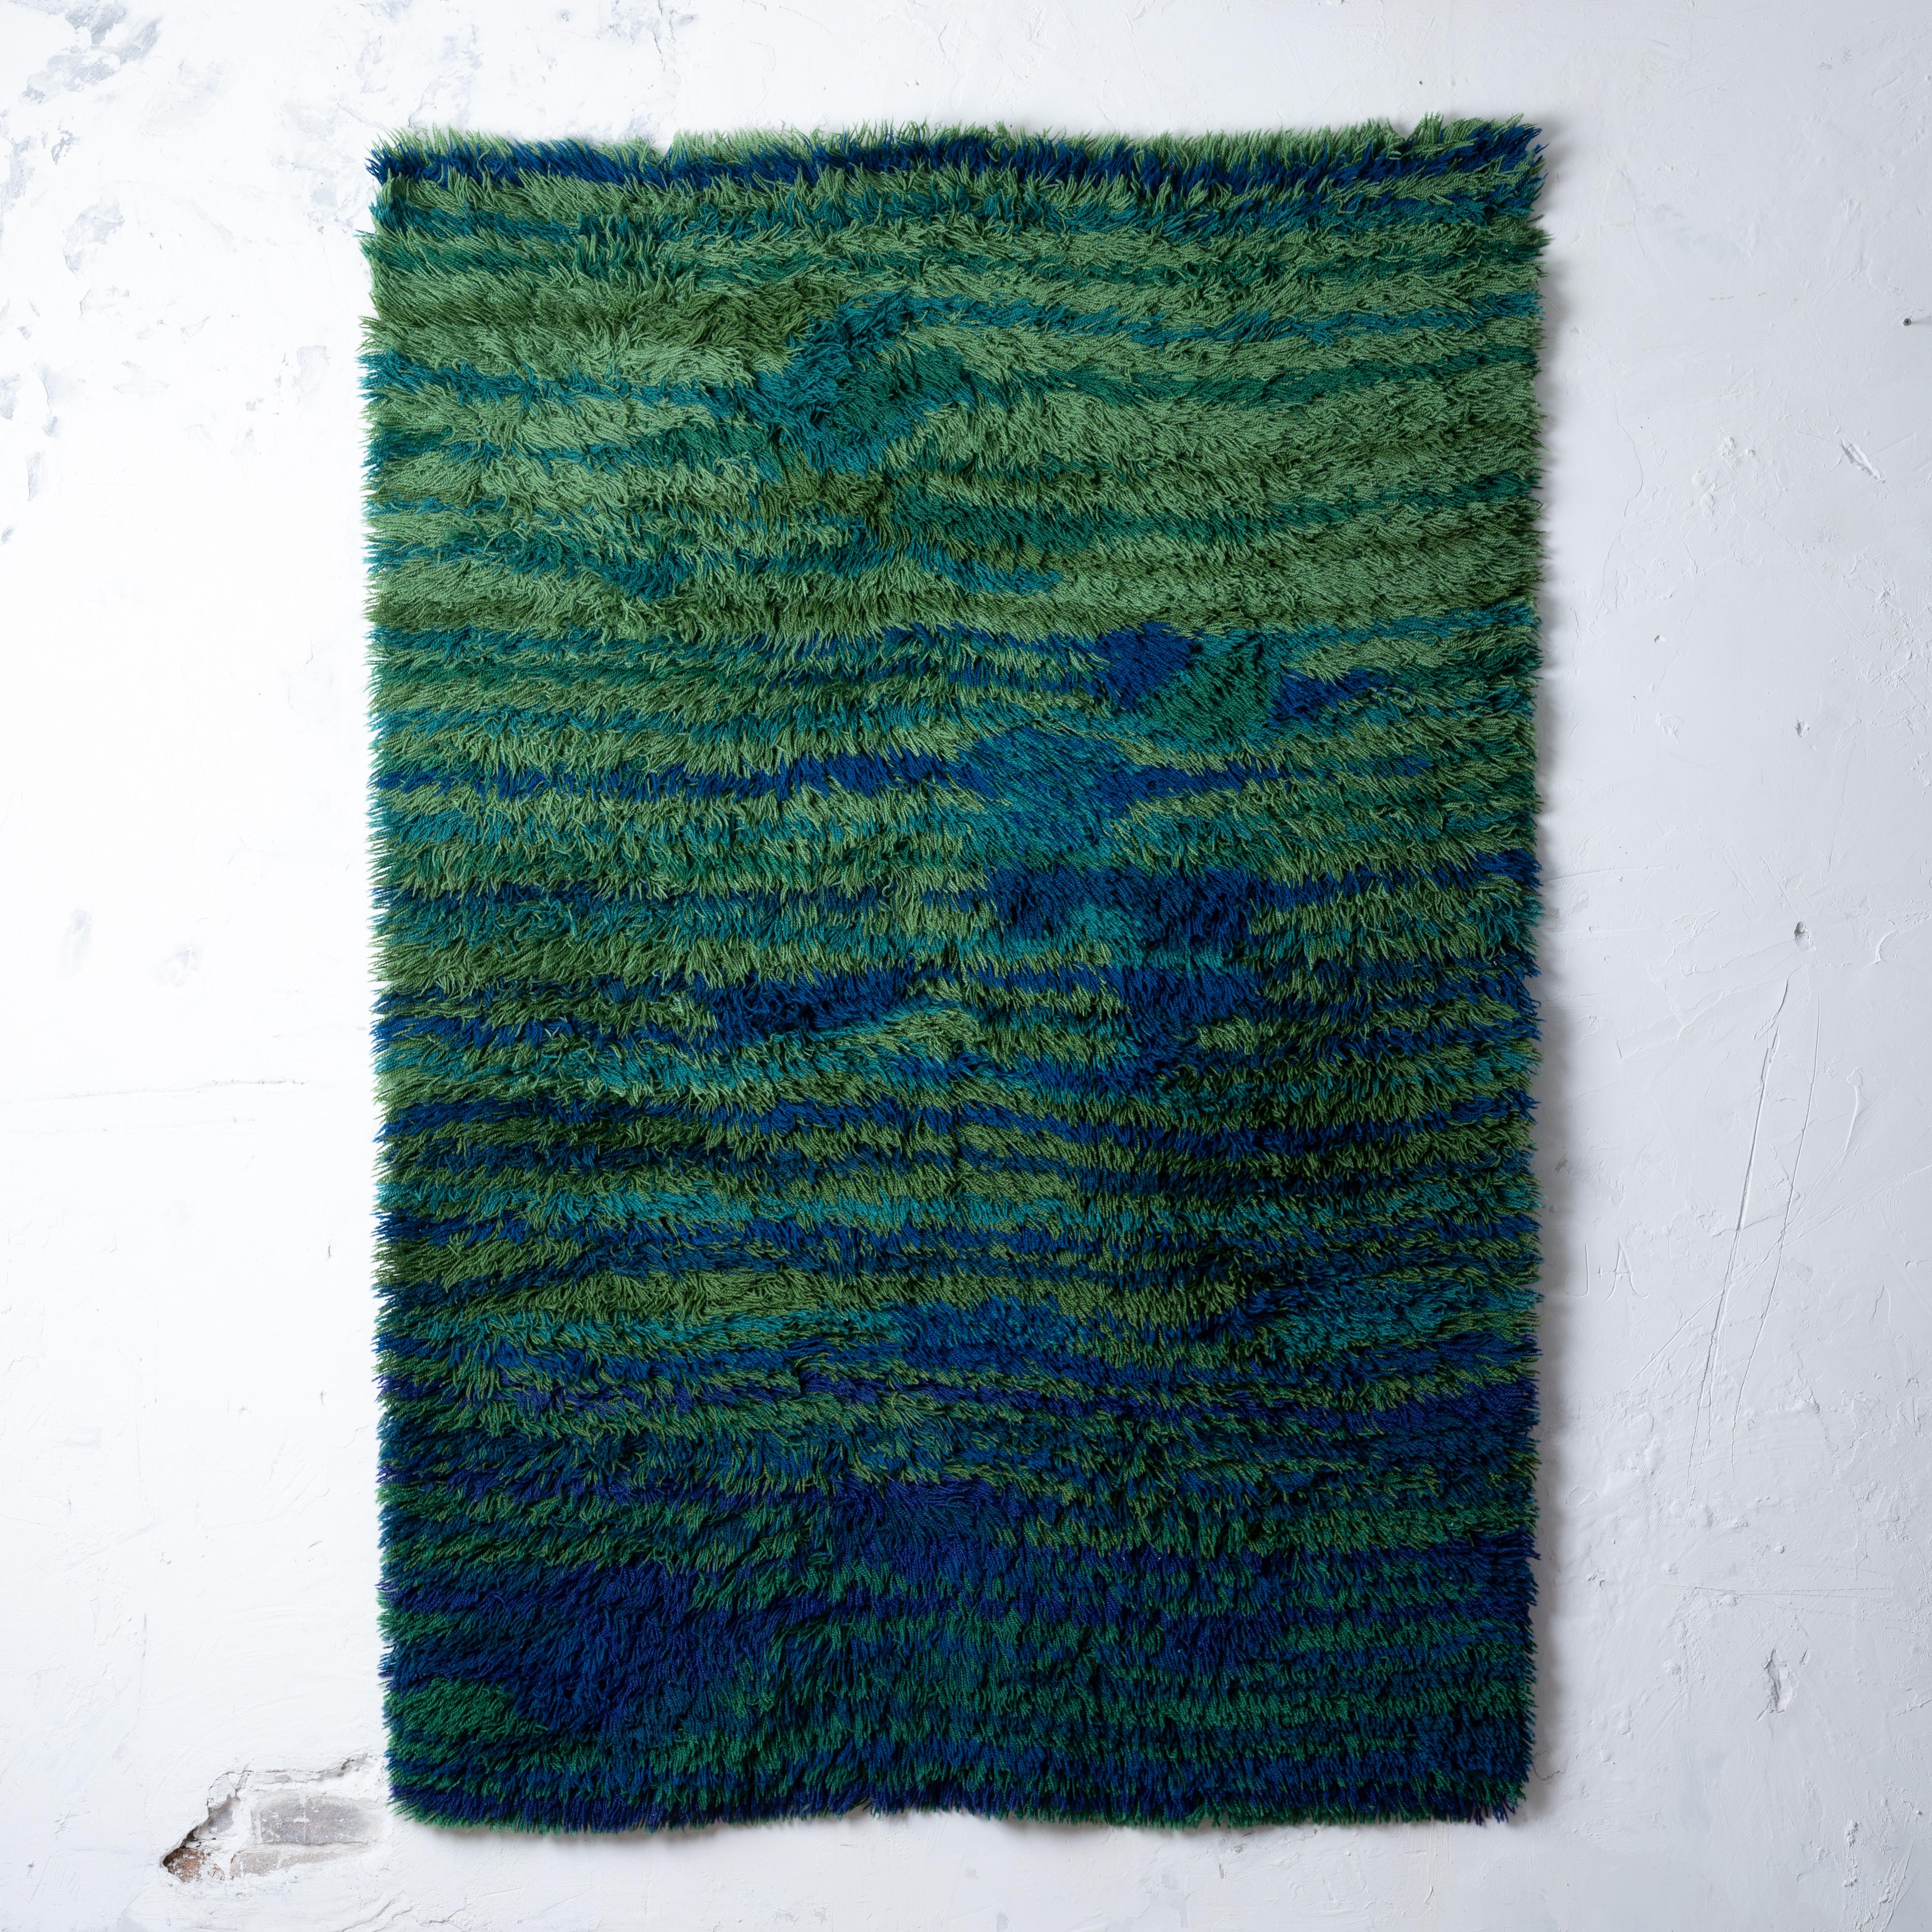 A green and blue Danish modern rya shag rug, 1960s.

55 by 80 inches